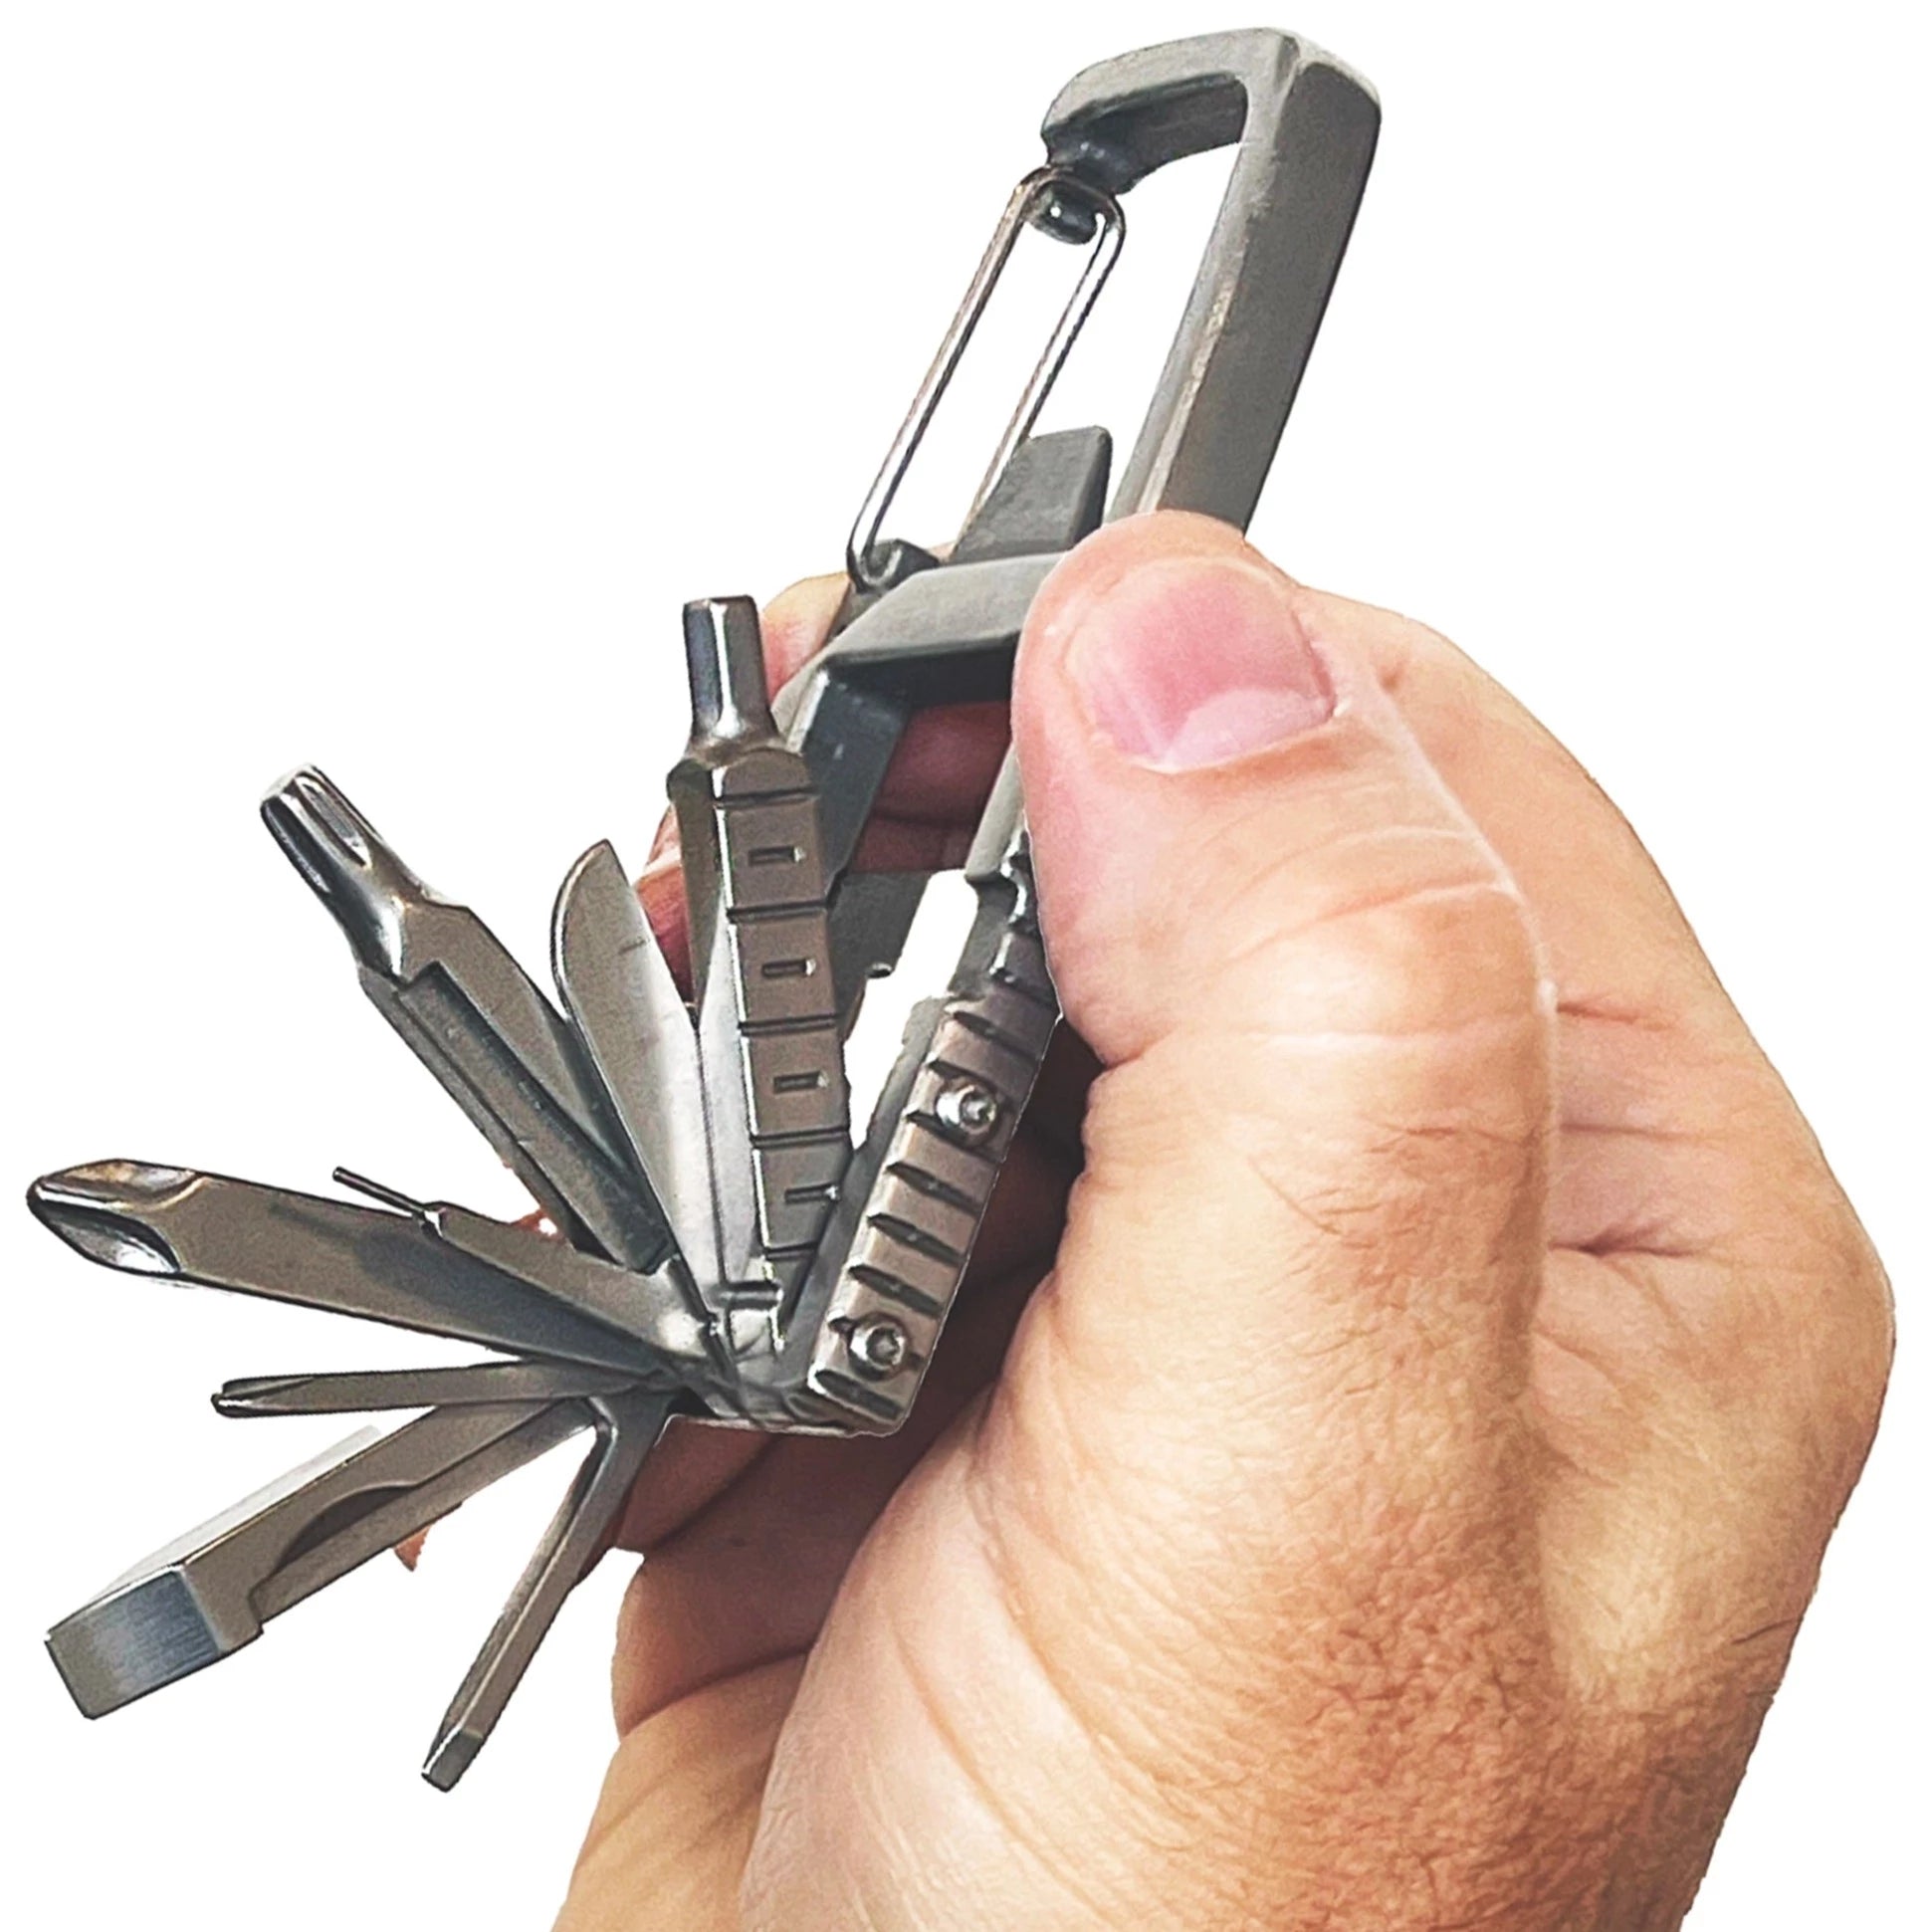 "The Fix Is In" Screwdriver Multi-tool & Carabiner